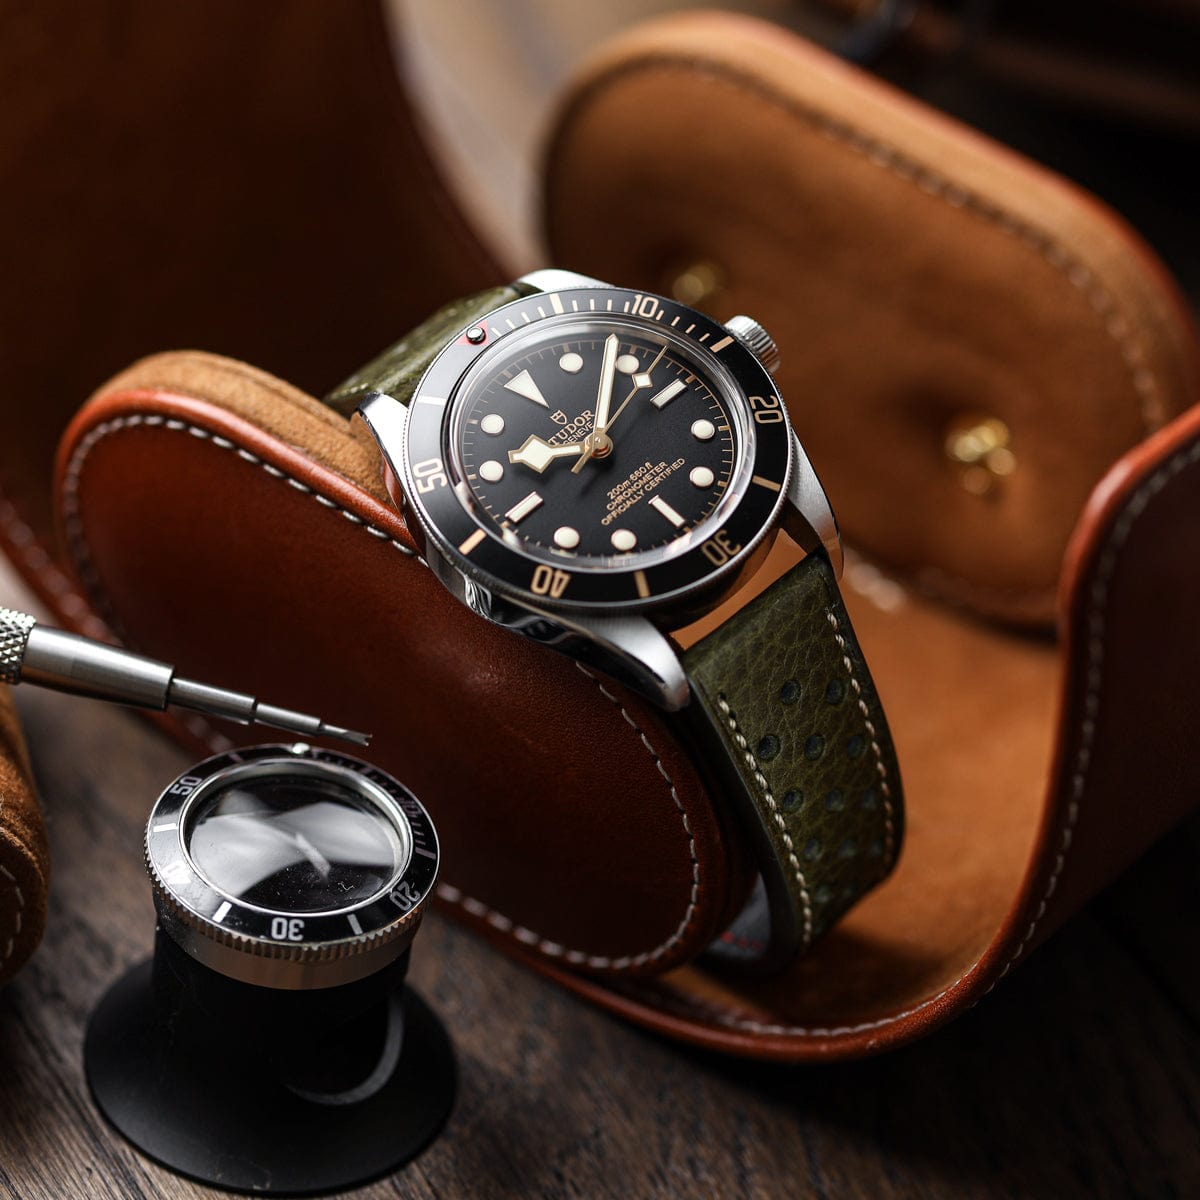 Beaufort Racing Conceria Opera Suede Perforated Watch Strap - Dark Brown